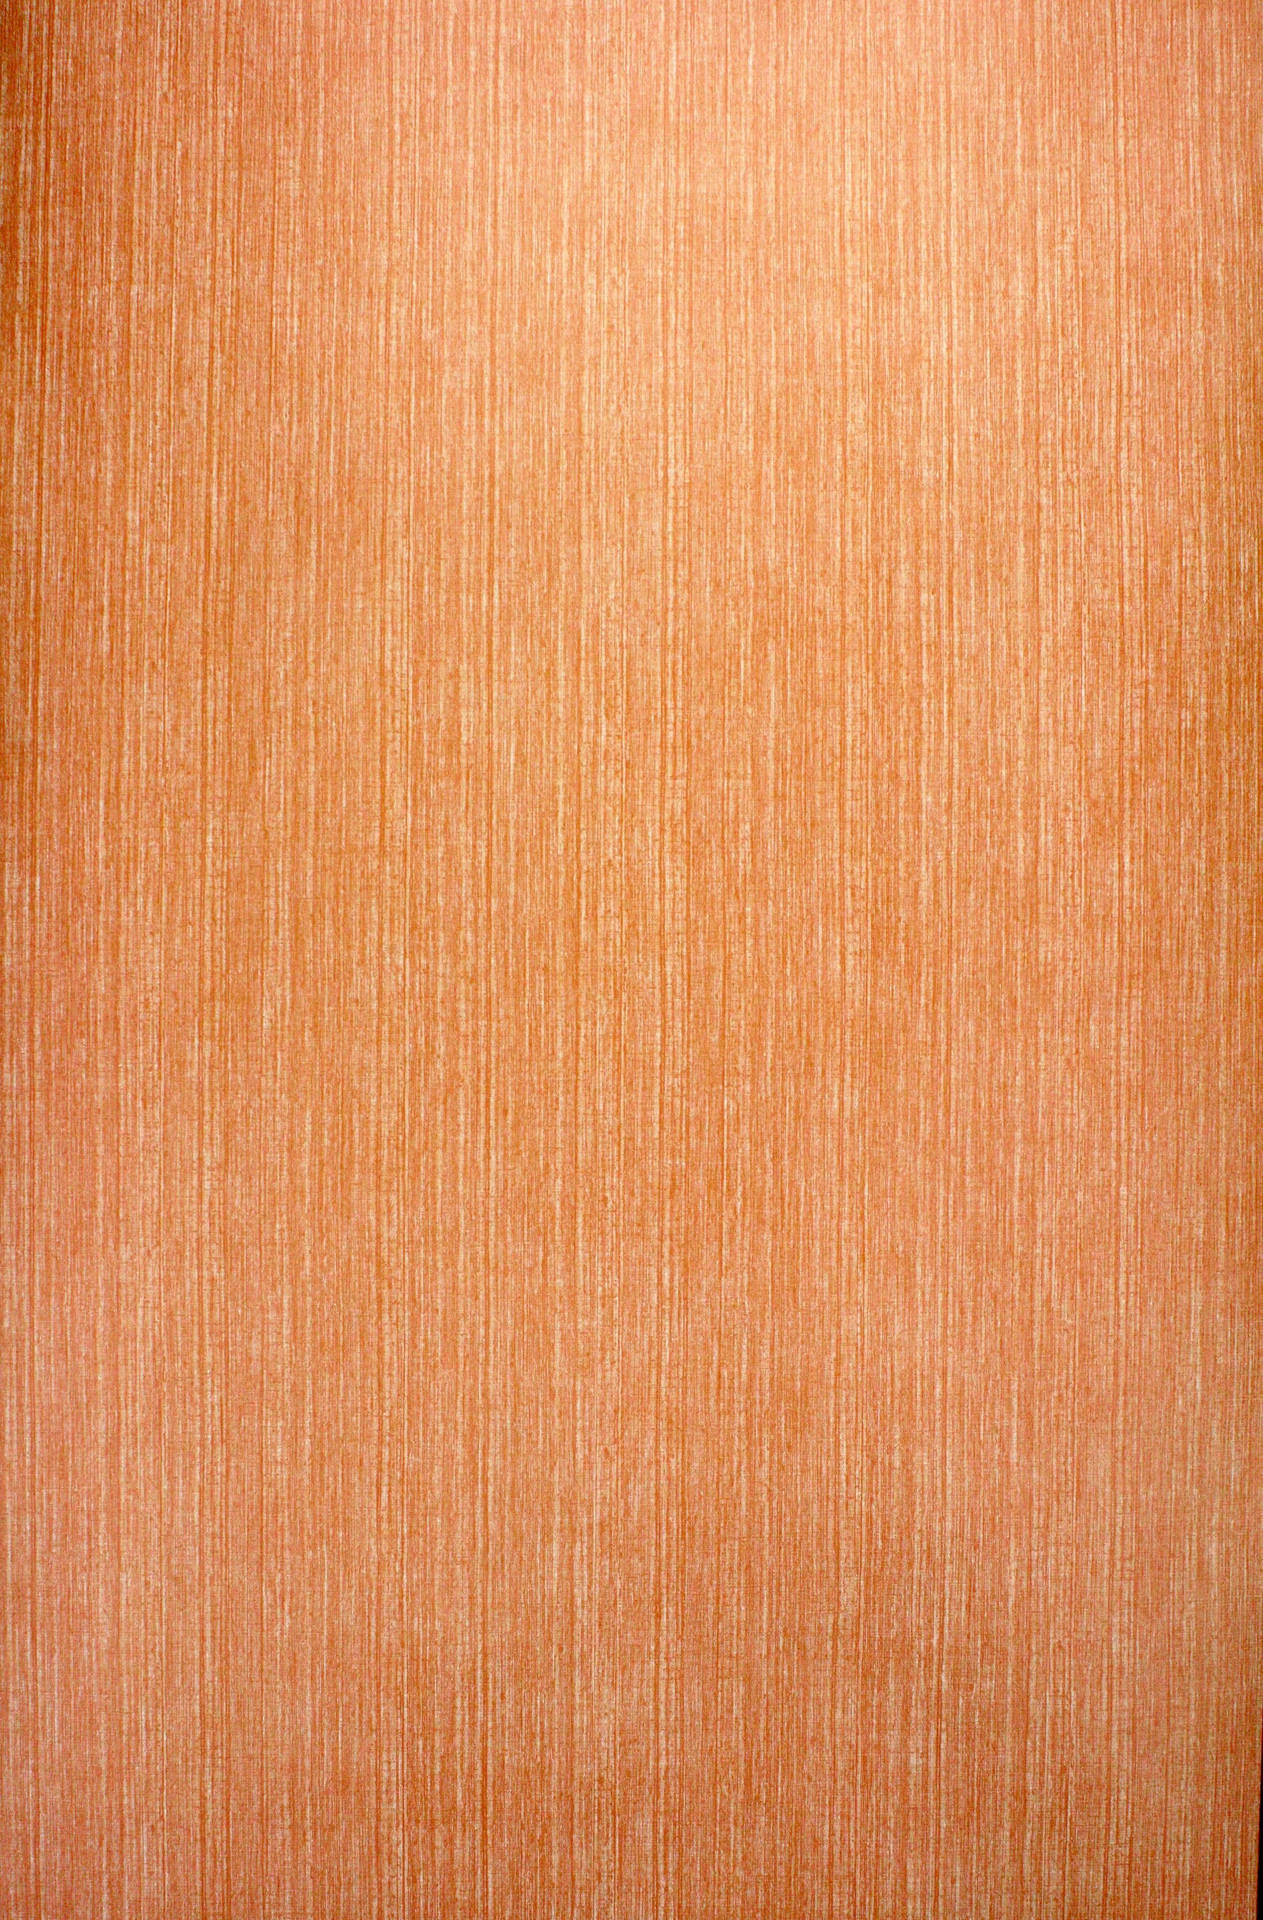 Plain Tawny Brown Wood Texture